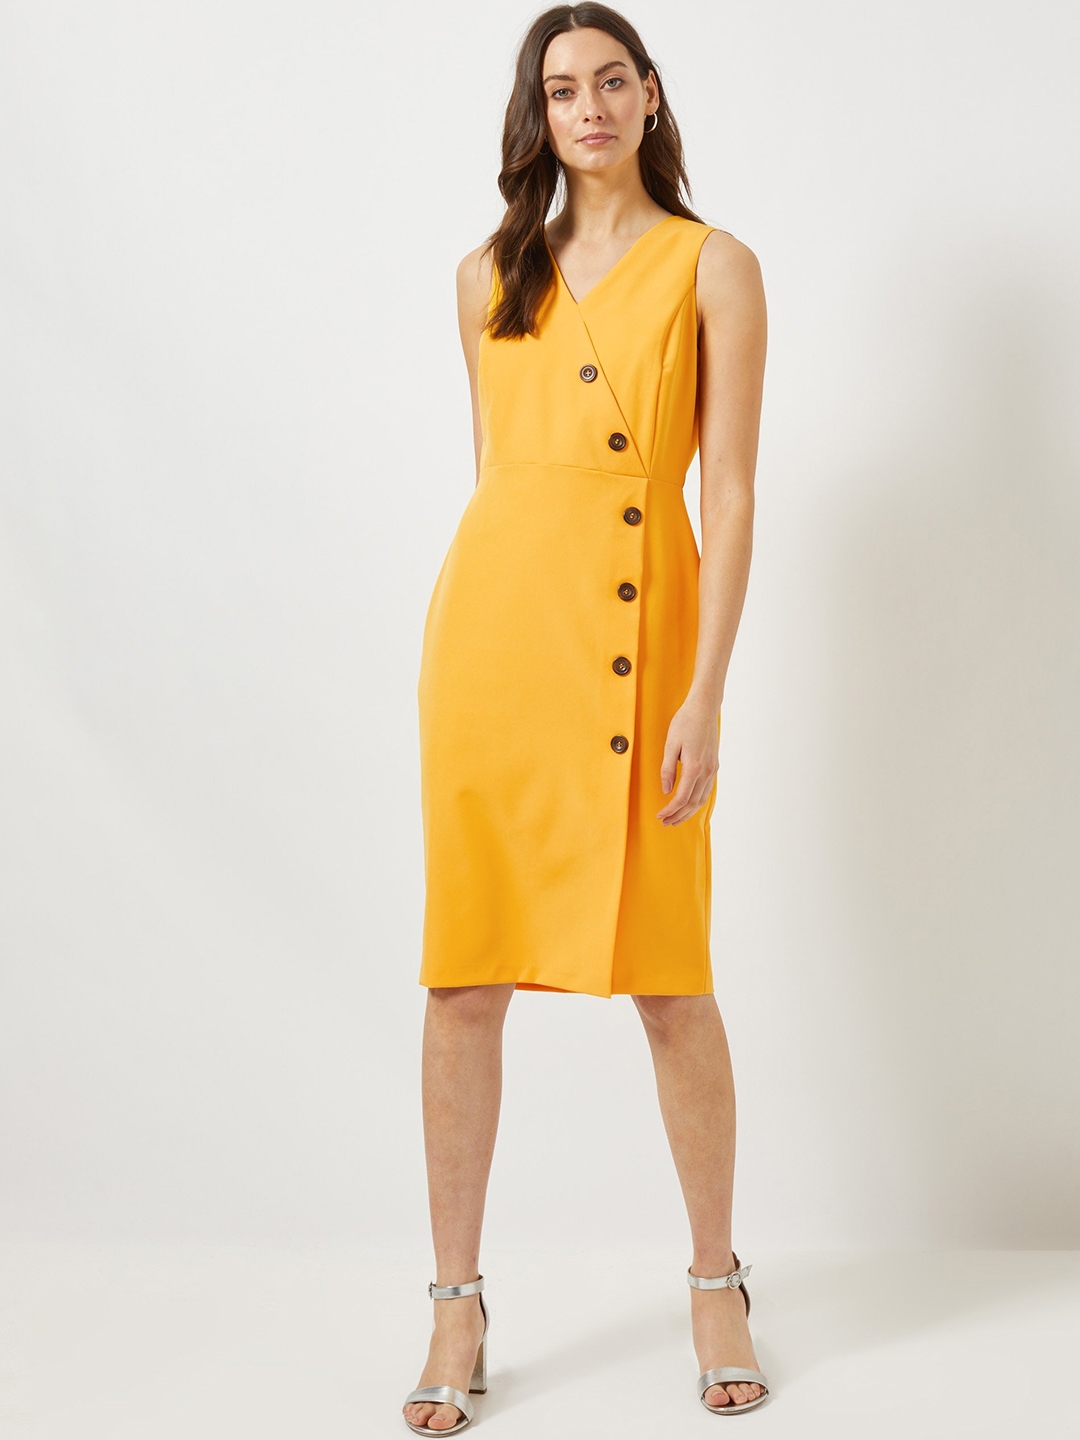 65% OFF on DOROTHY PERKINS Women Yellow Solid Wrap Dress on Myntra |  PaisaWapas.com